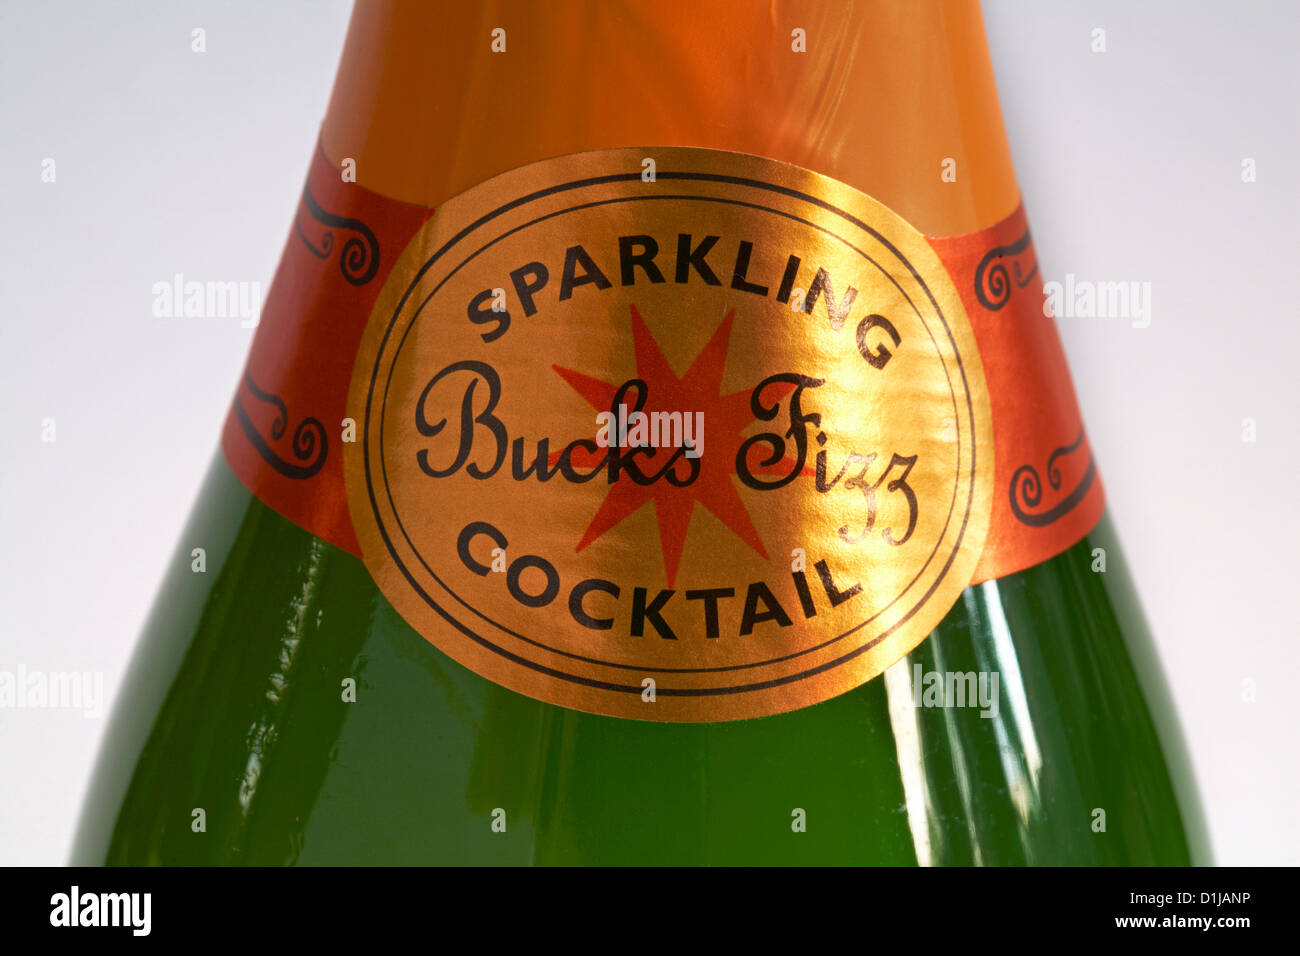 Sparkling Bucks Fizz cocktail label on bottle Stock Photo